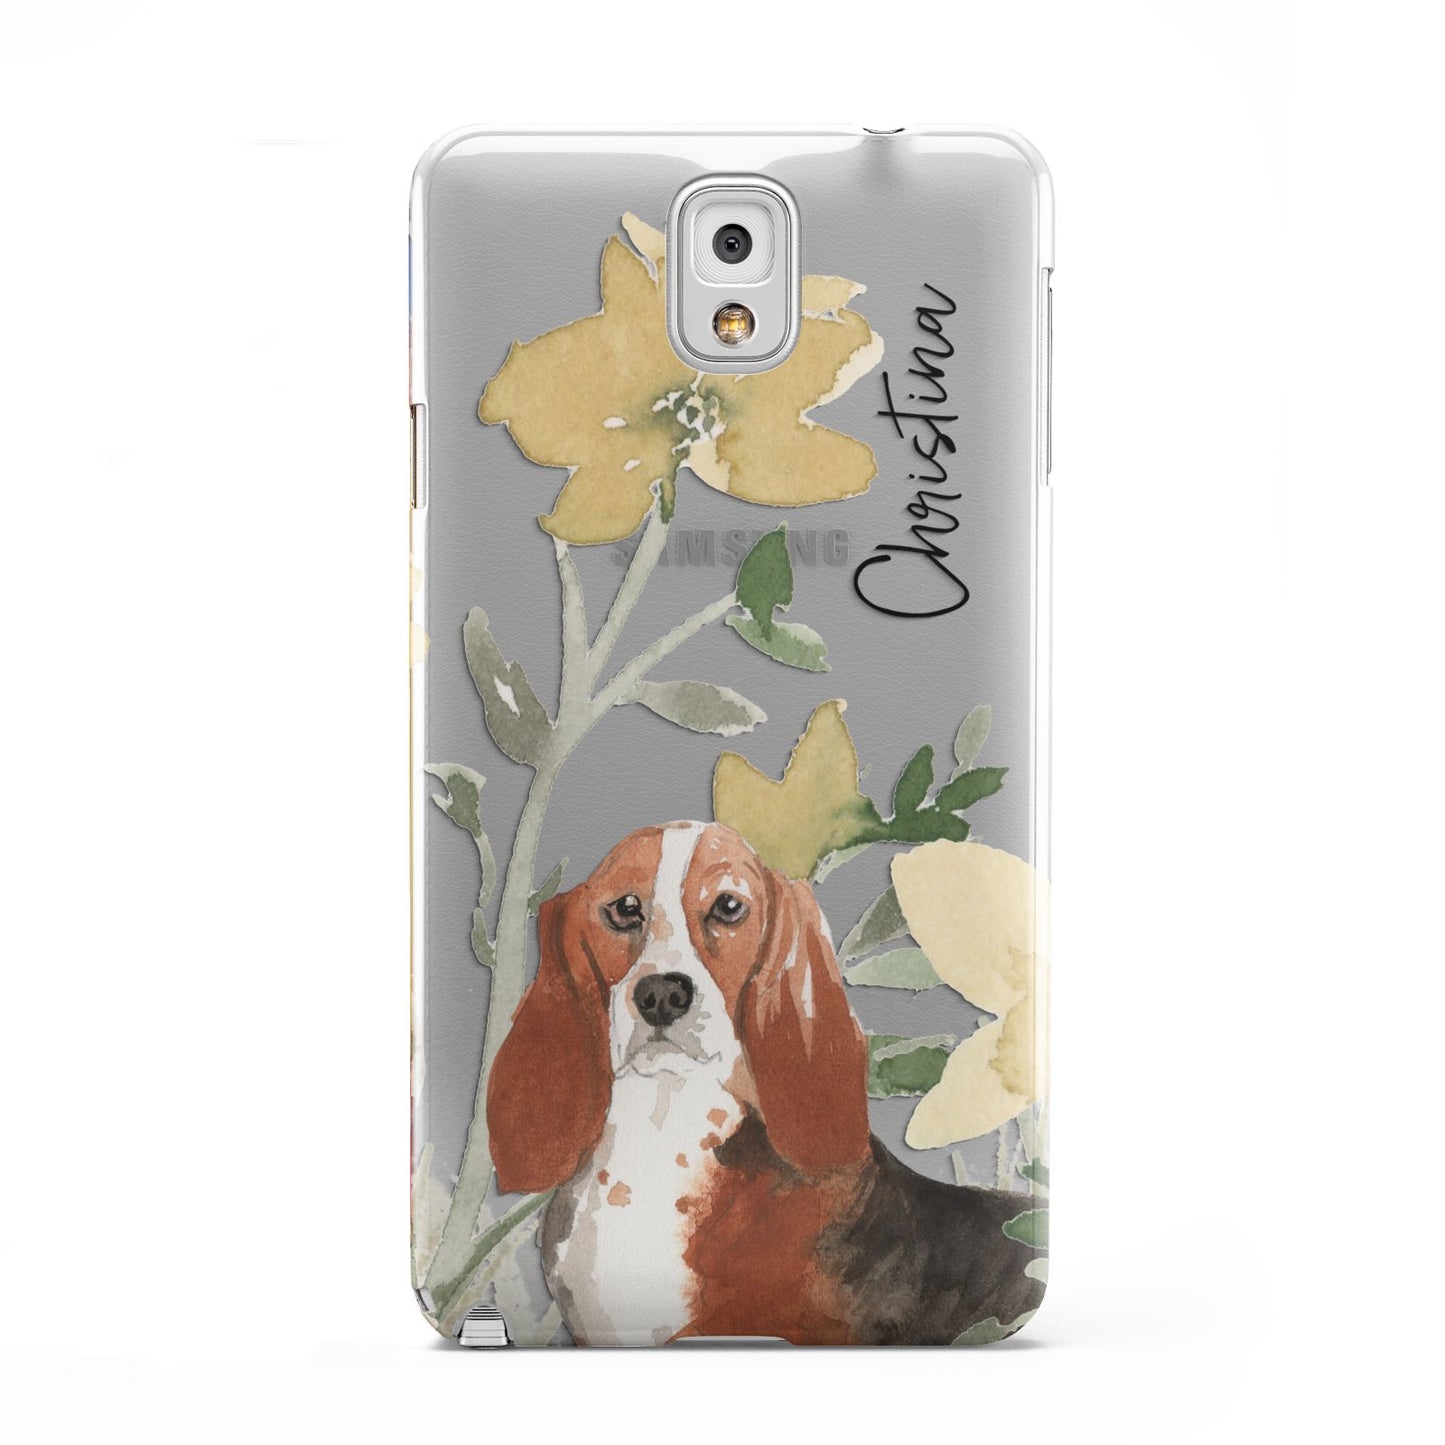 Personalised Basset Hound Dog Samsung Galaxy Note 3 Case